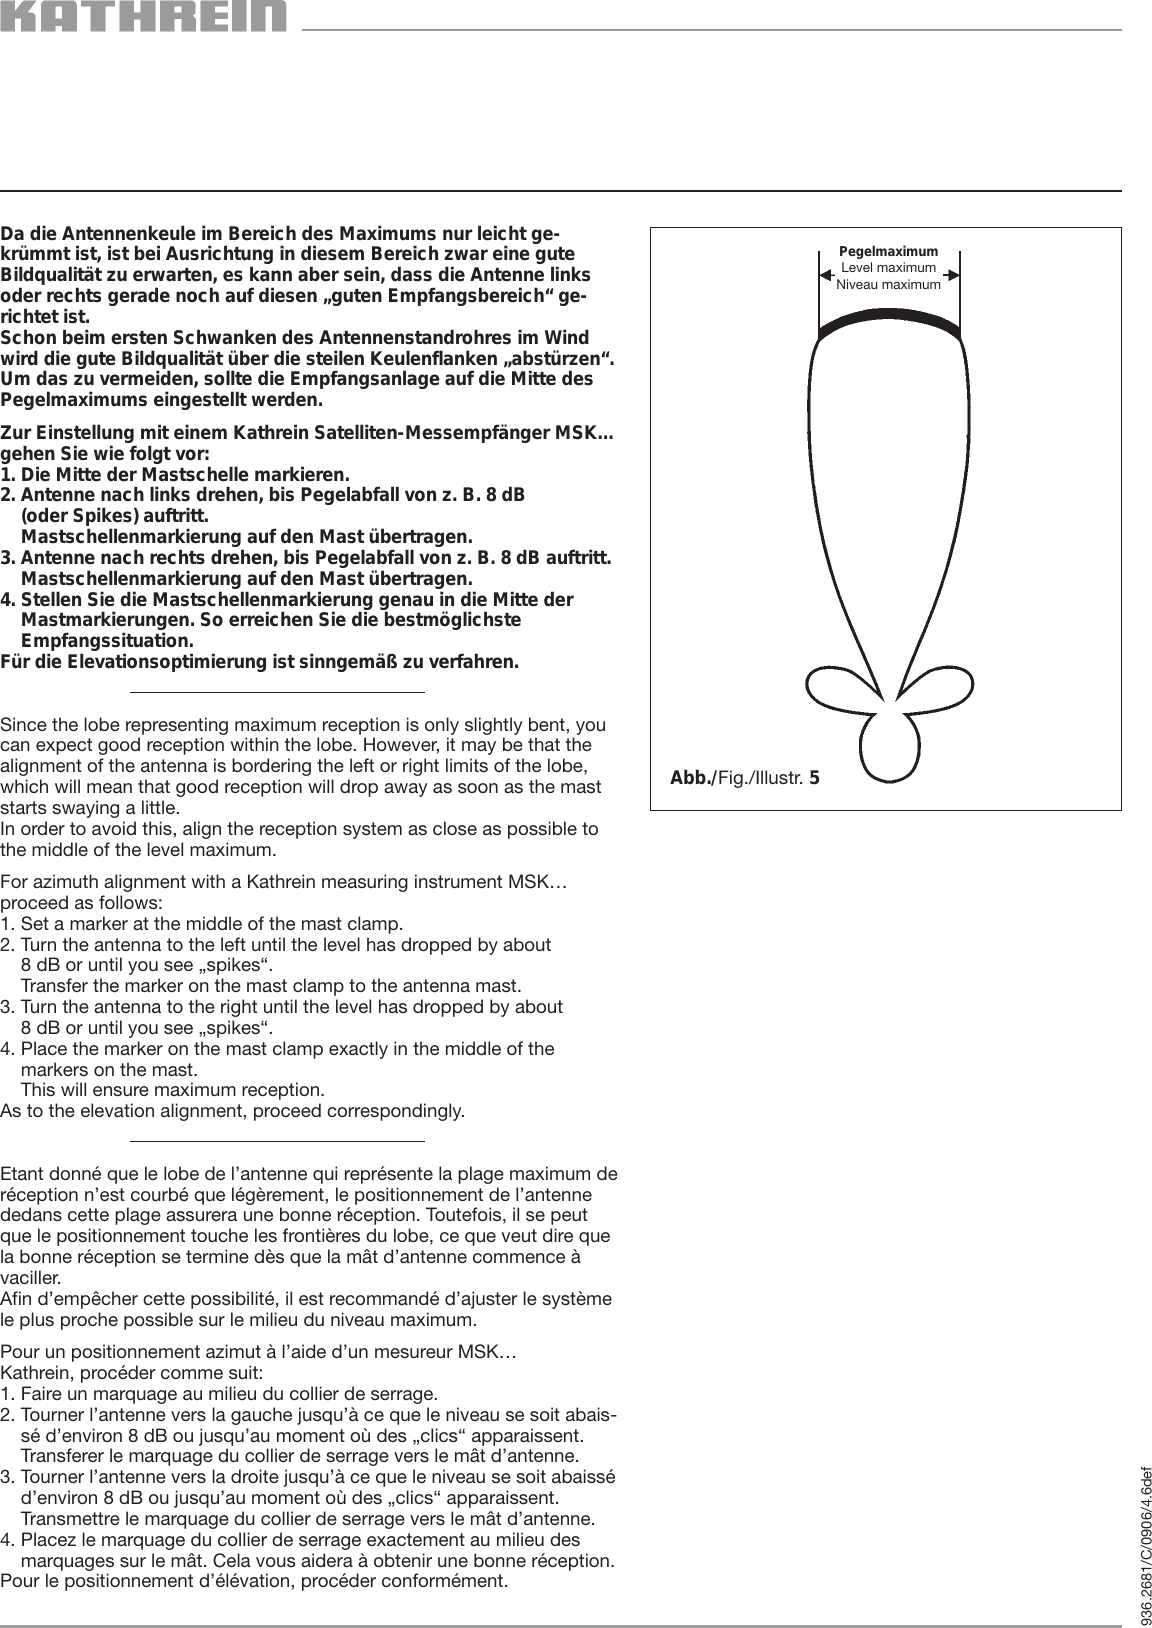 Page 4 of 6 - Kathrein Kathrein-Universal-Feed-Systems-Uas-177-Users-Manual- 9362681c, Universal-Speisesystem Mit 1 Ausgang UAS 177  Kathrein-universal-feed-systems-uas-177-users-manual